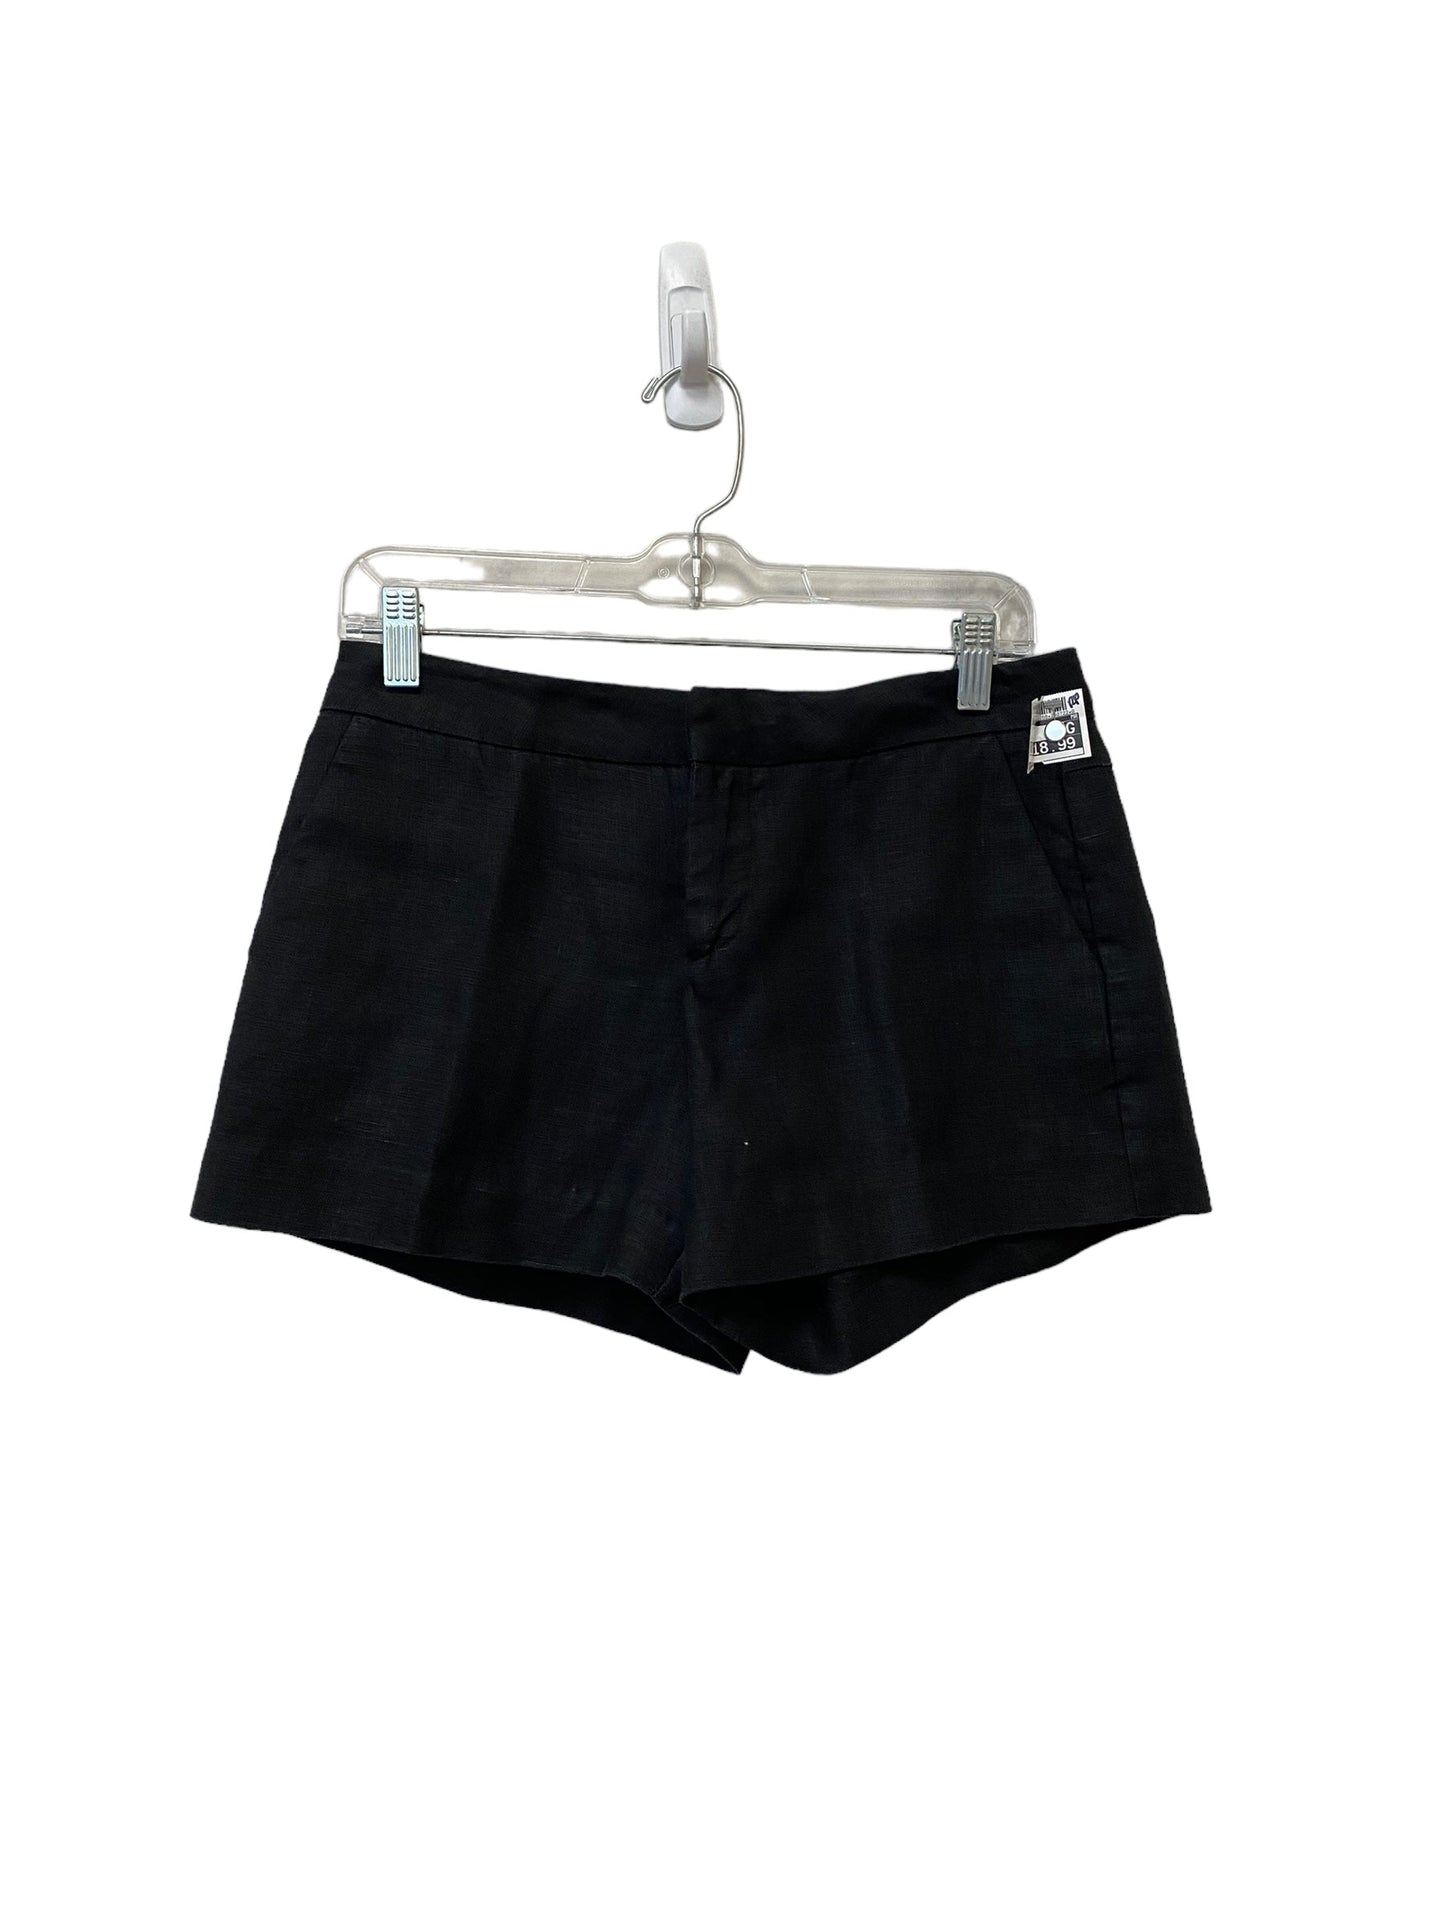 Black Shorts Joie, Size 2